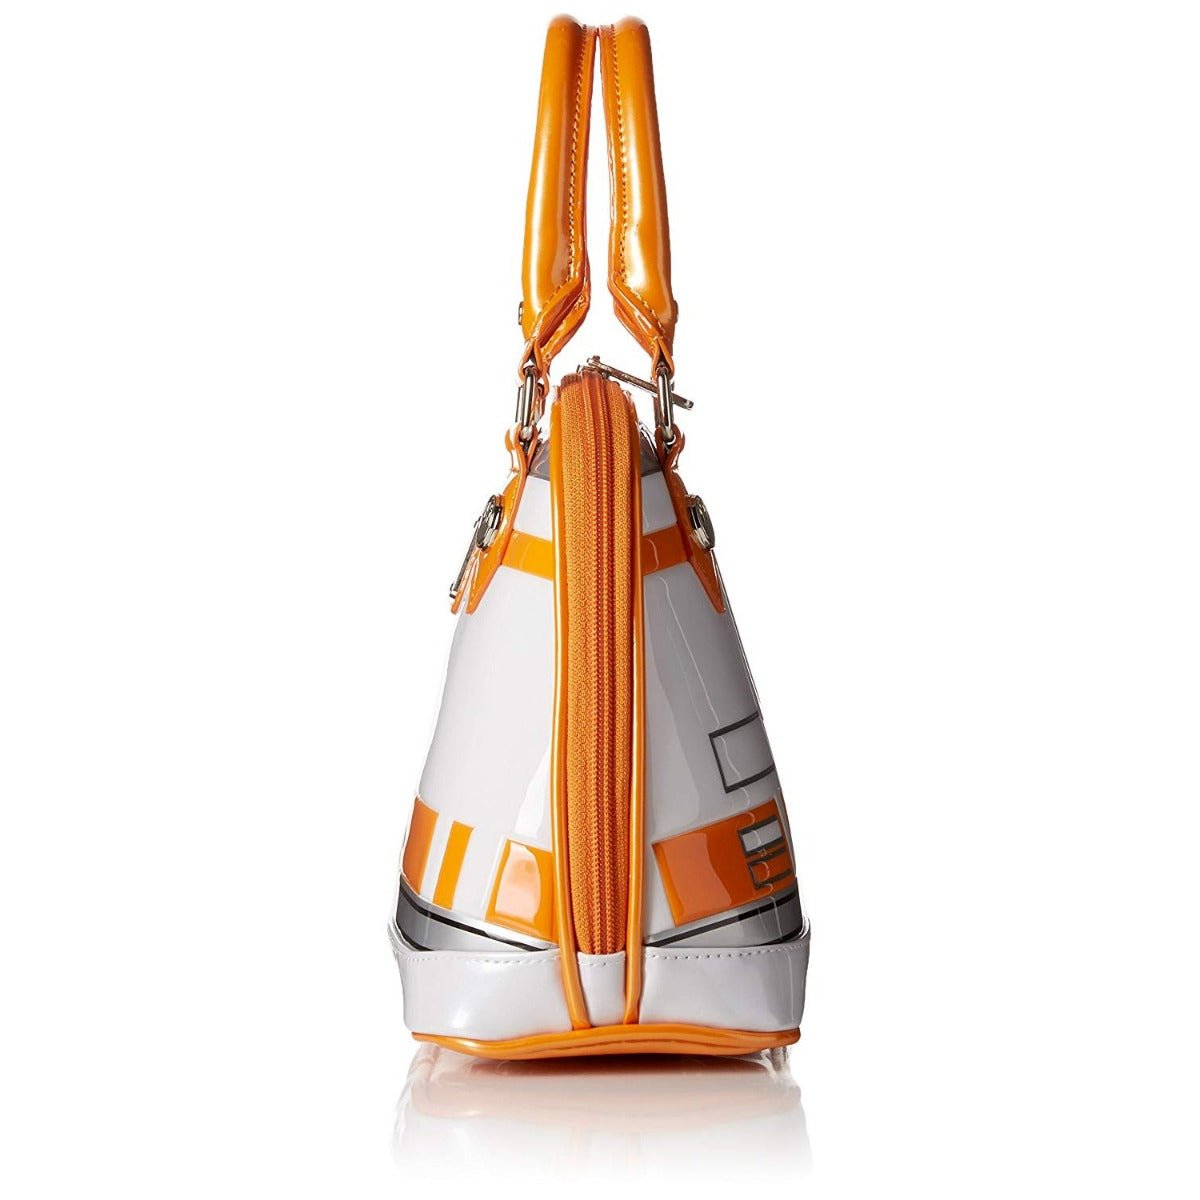 Loungefly x Star Wars BB - 8 Patent Dome Handbag - GeekCore